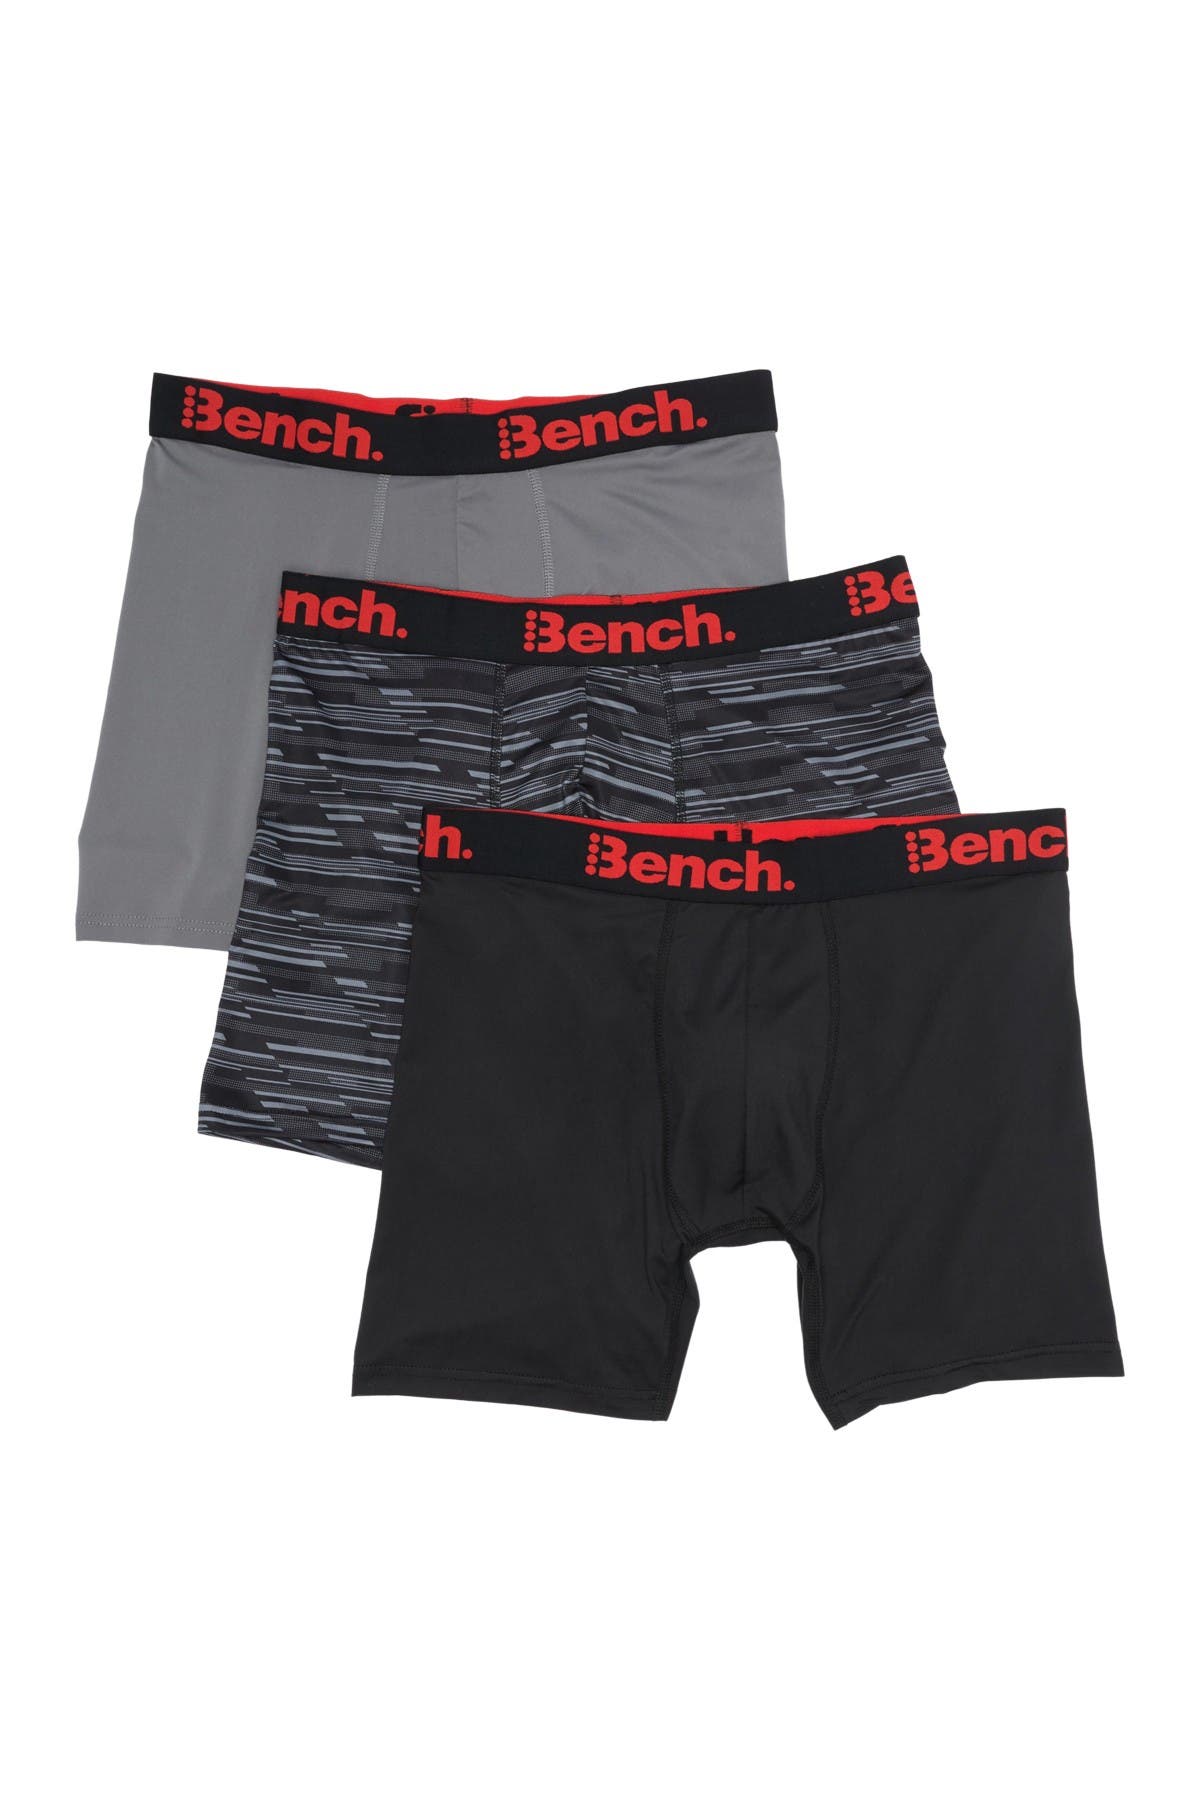 Bench Performance Boxer Briefs In Black/grey